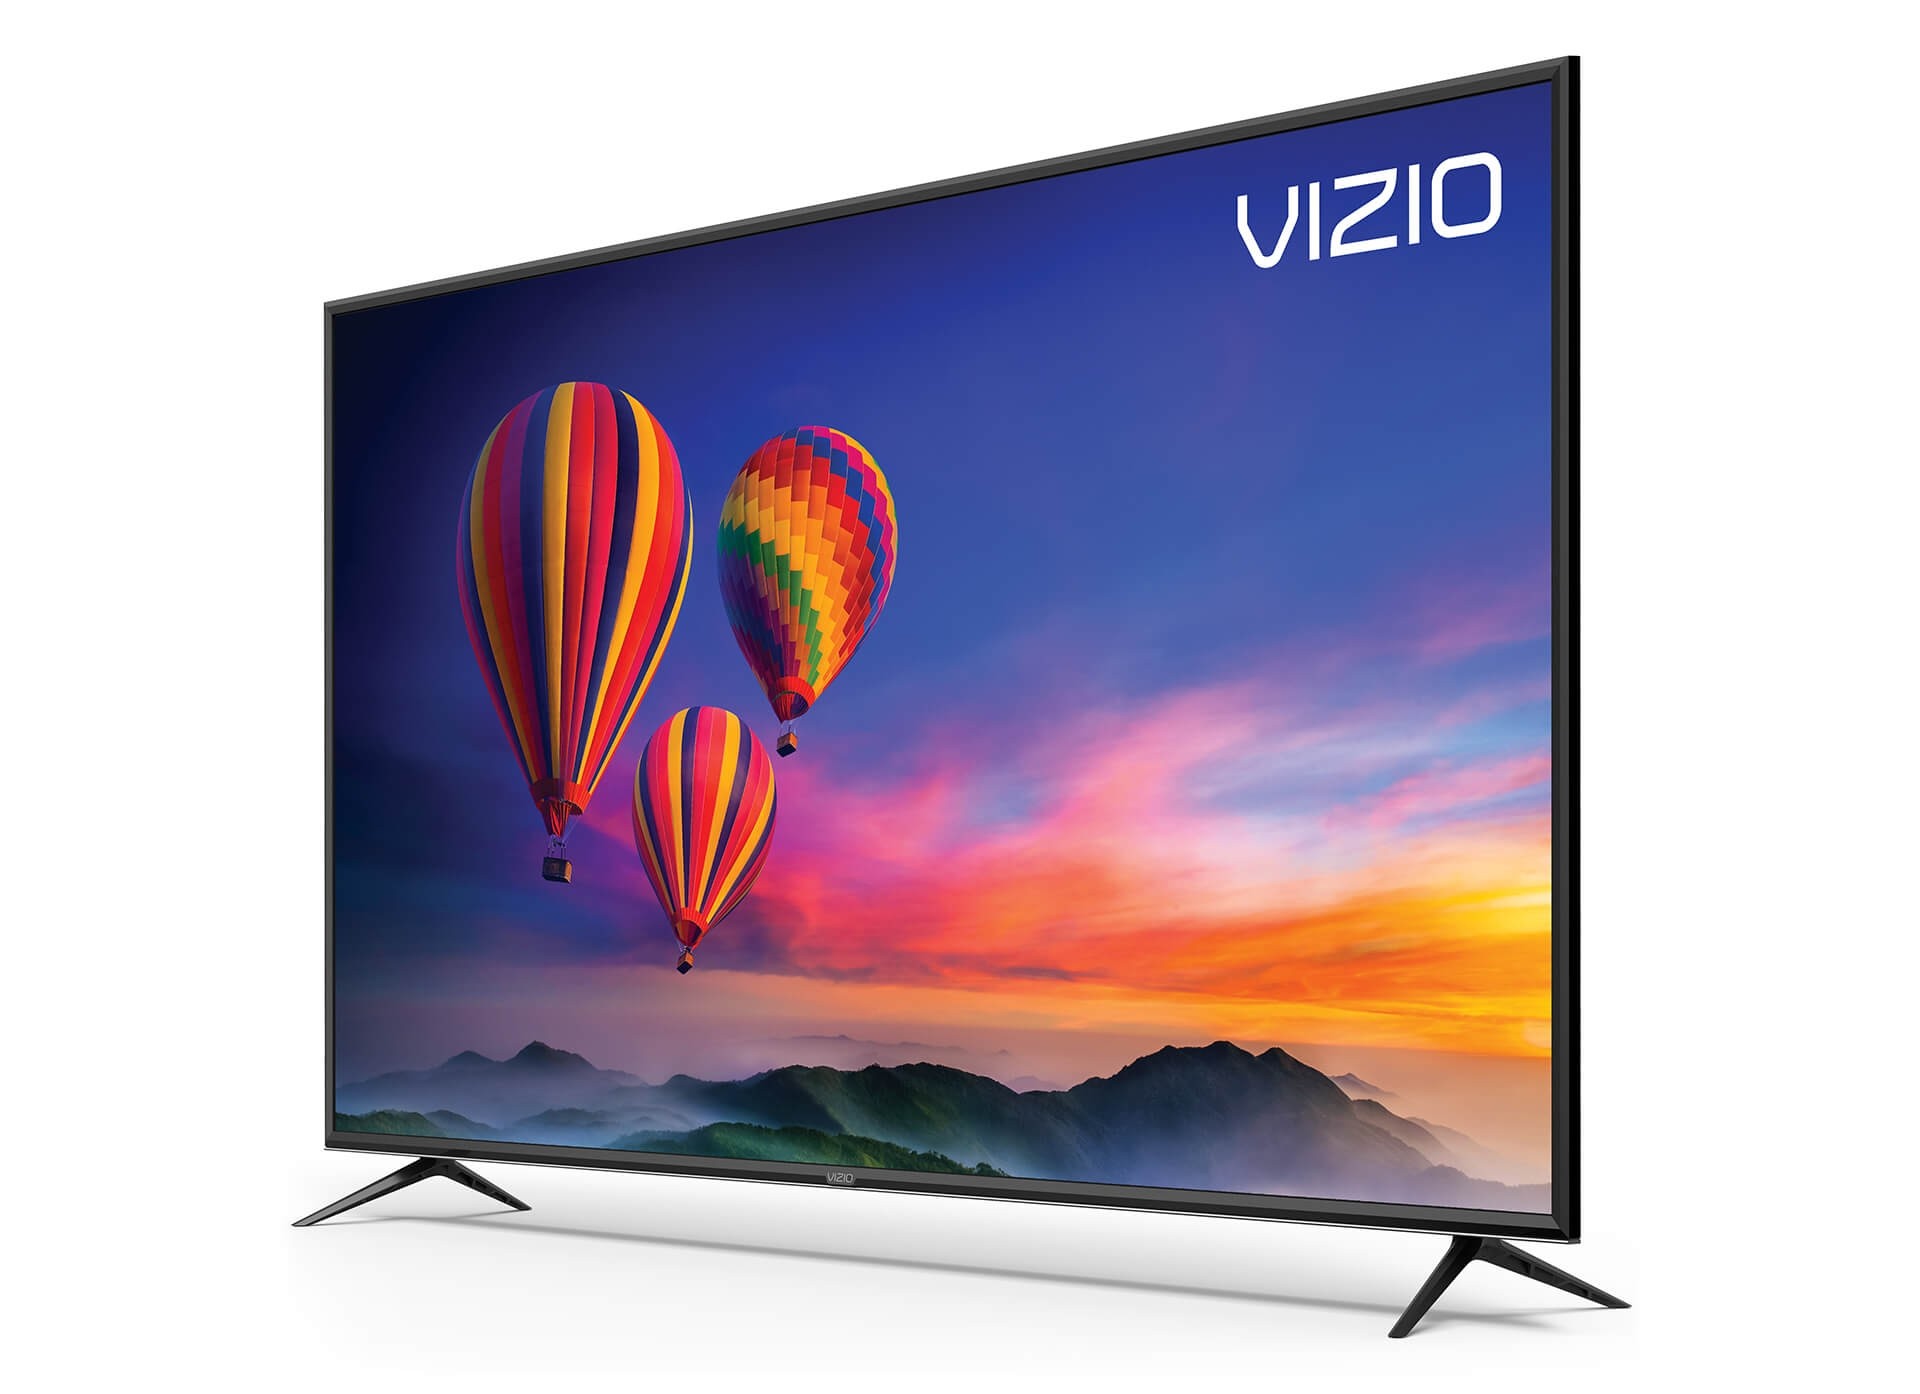 Restored VIZIO 75" Class 4K (2160P) Smart LED TV (E75F1) (Refurbished) - image 3 of 5